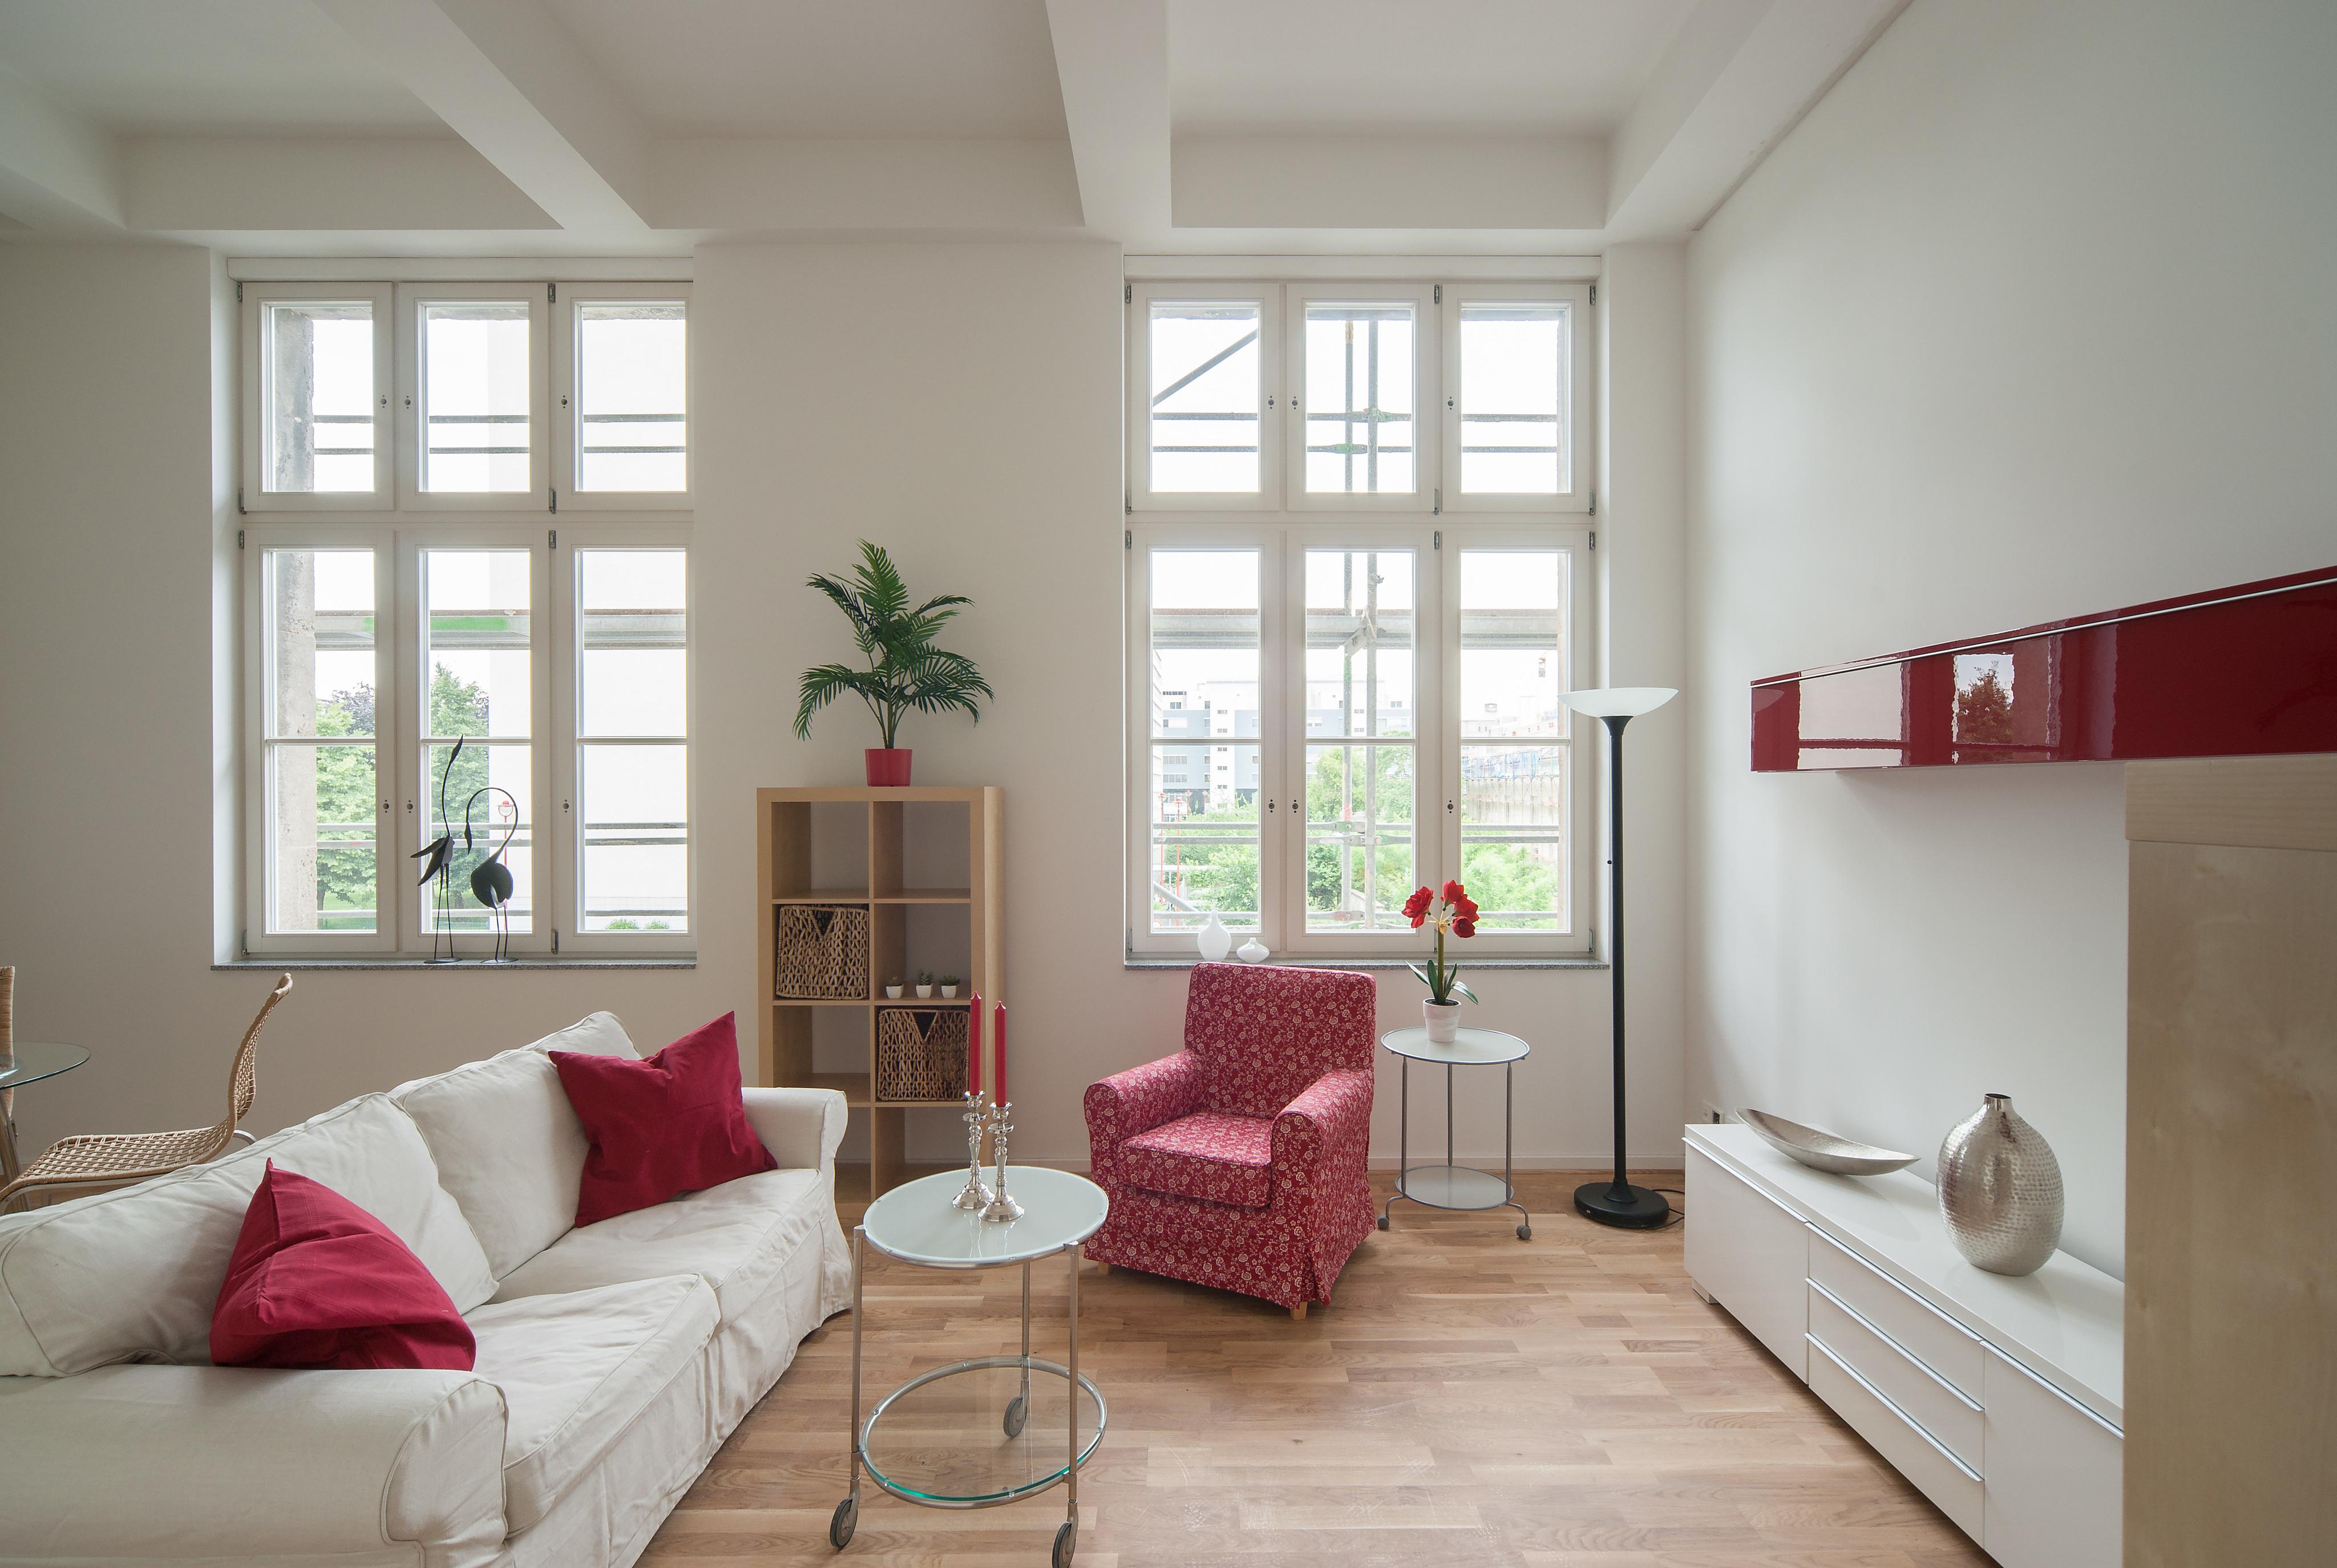 Musterwohnung – Leipzig Salomonstraße #sessel #sofa #rotersessel #wohnwand ©Miracleroom